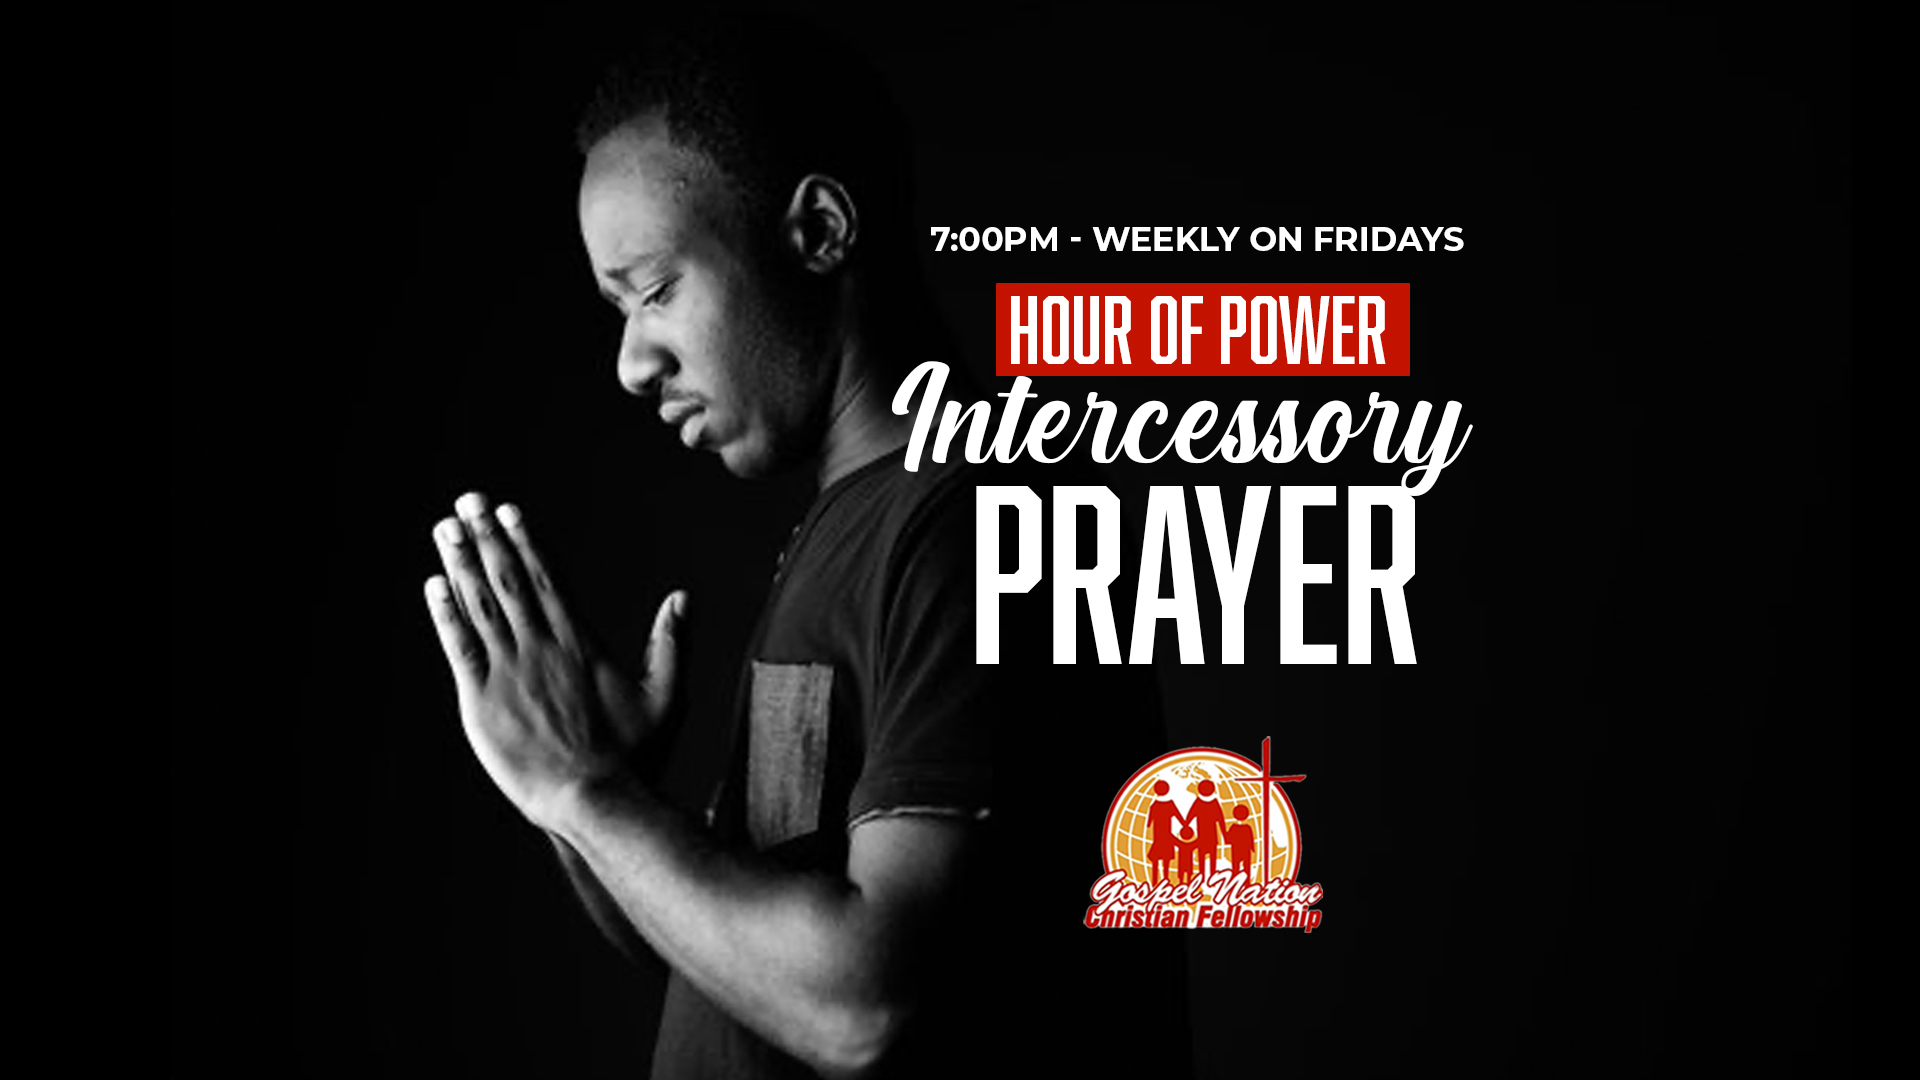 Hour of Power Intercessory Prayer